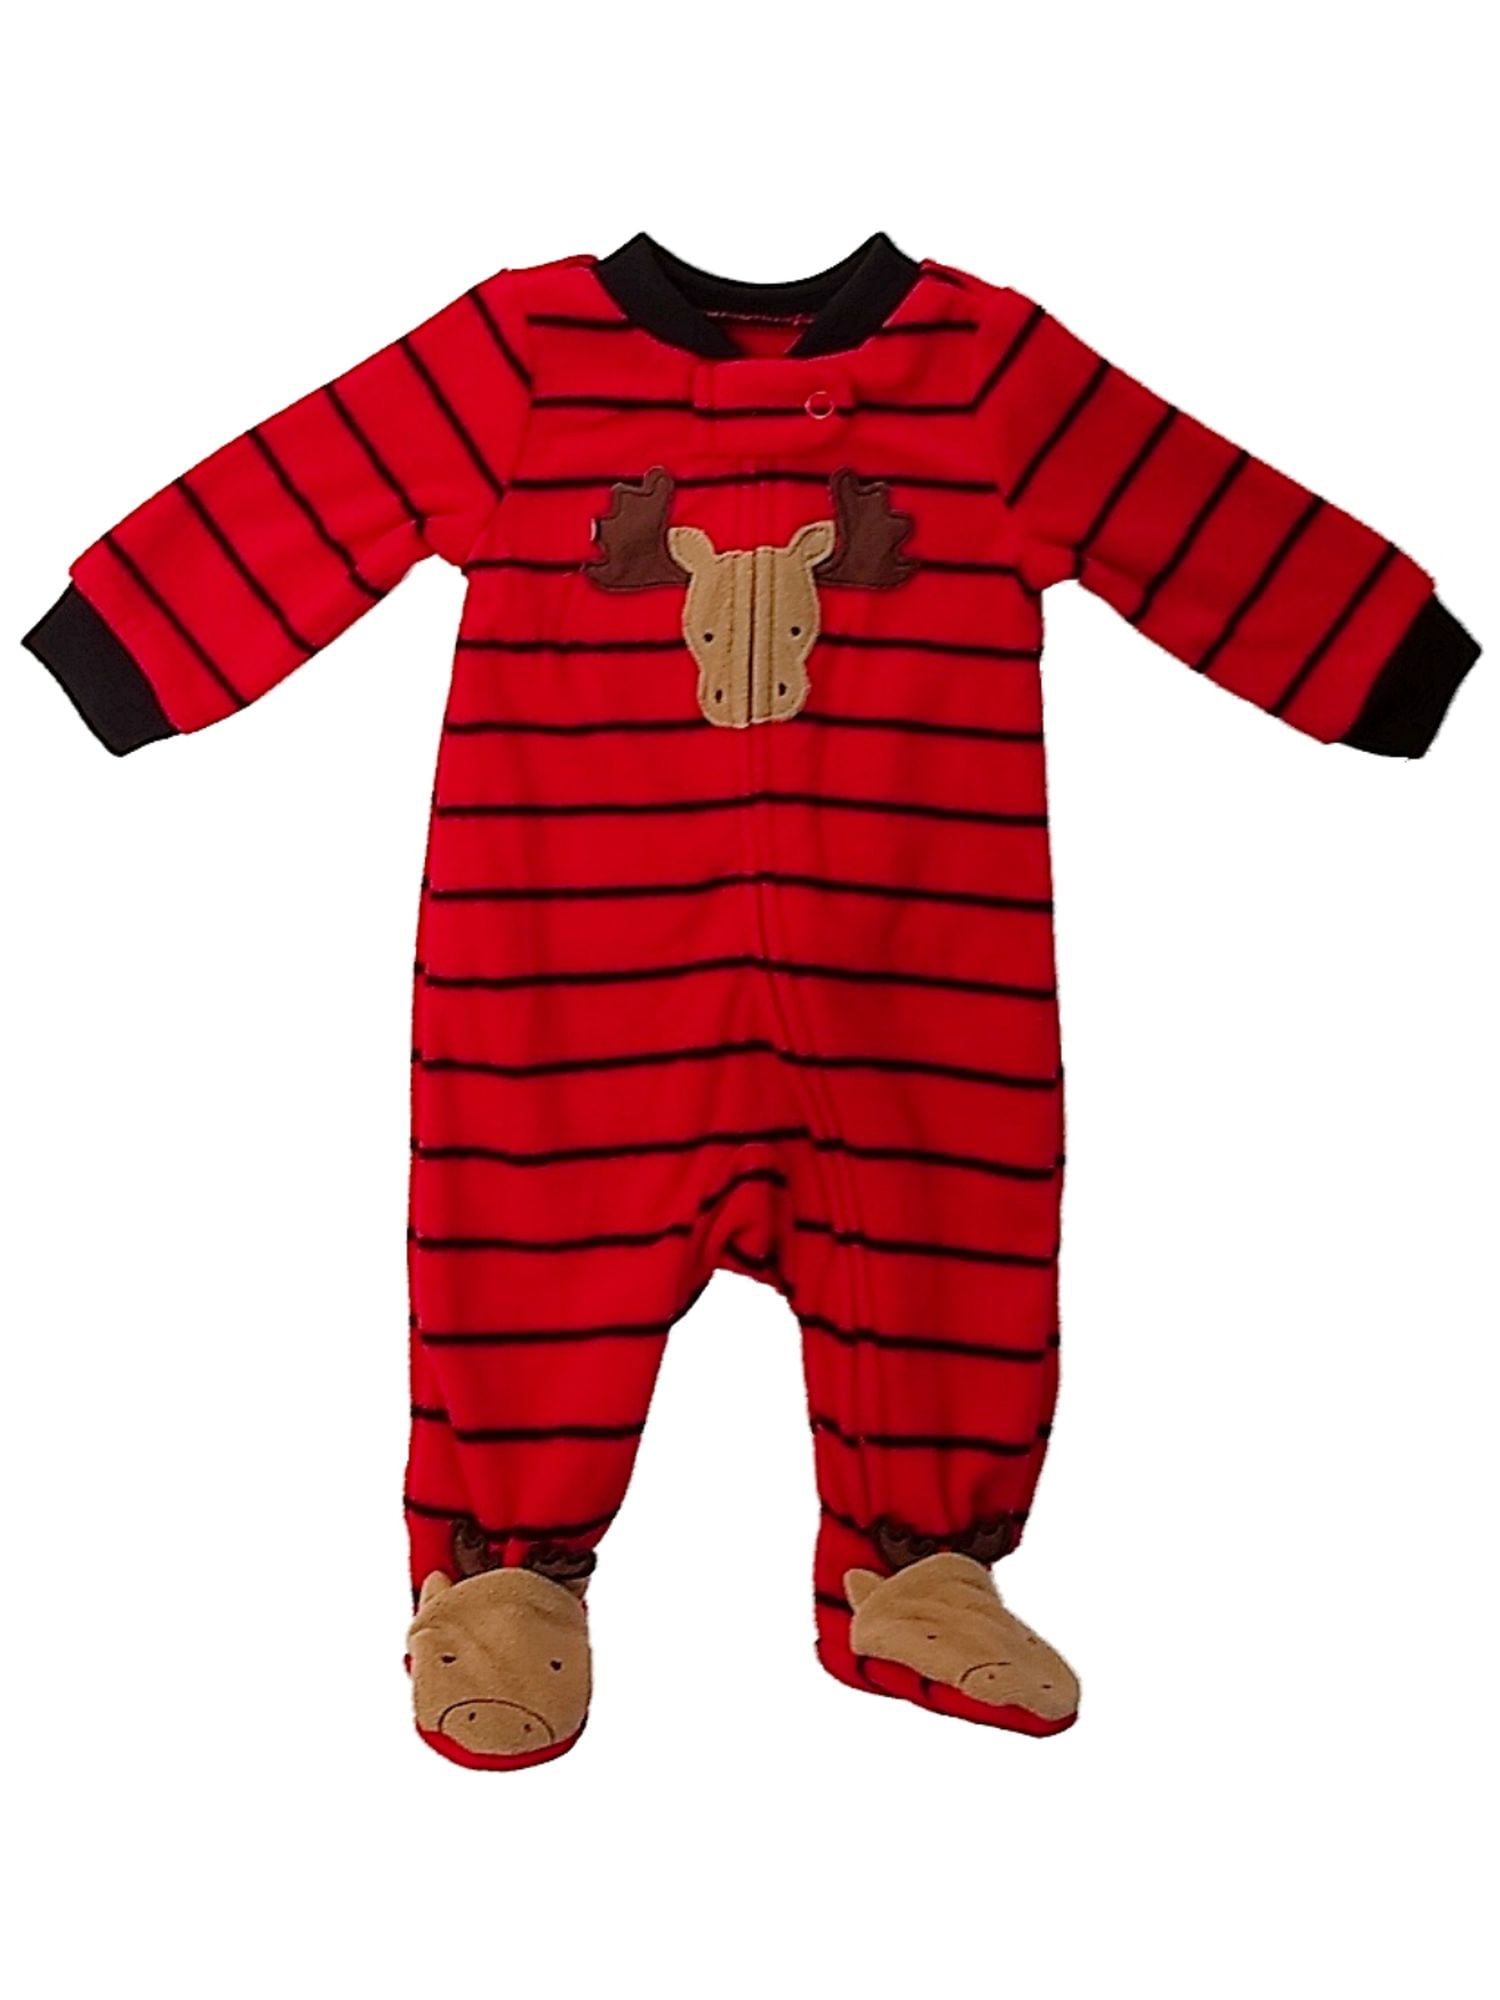 Carters Infant Boys Red Stripe Fleece Christmas Reindeer Pajama Sleeper 